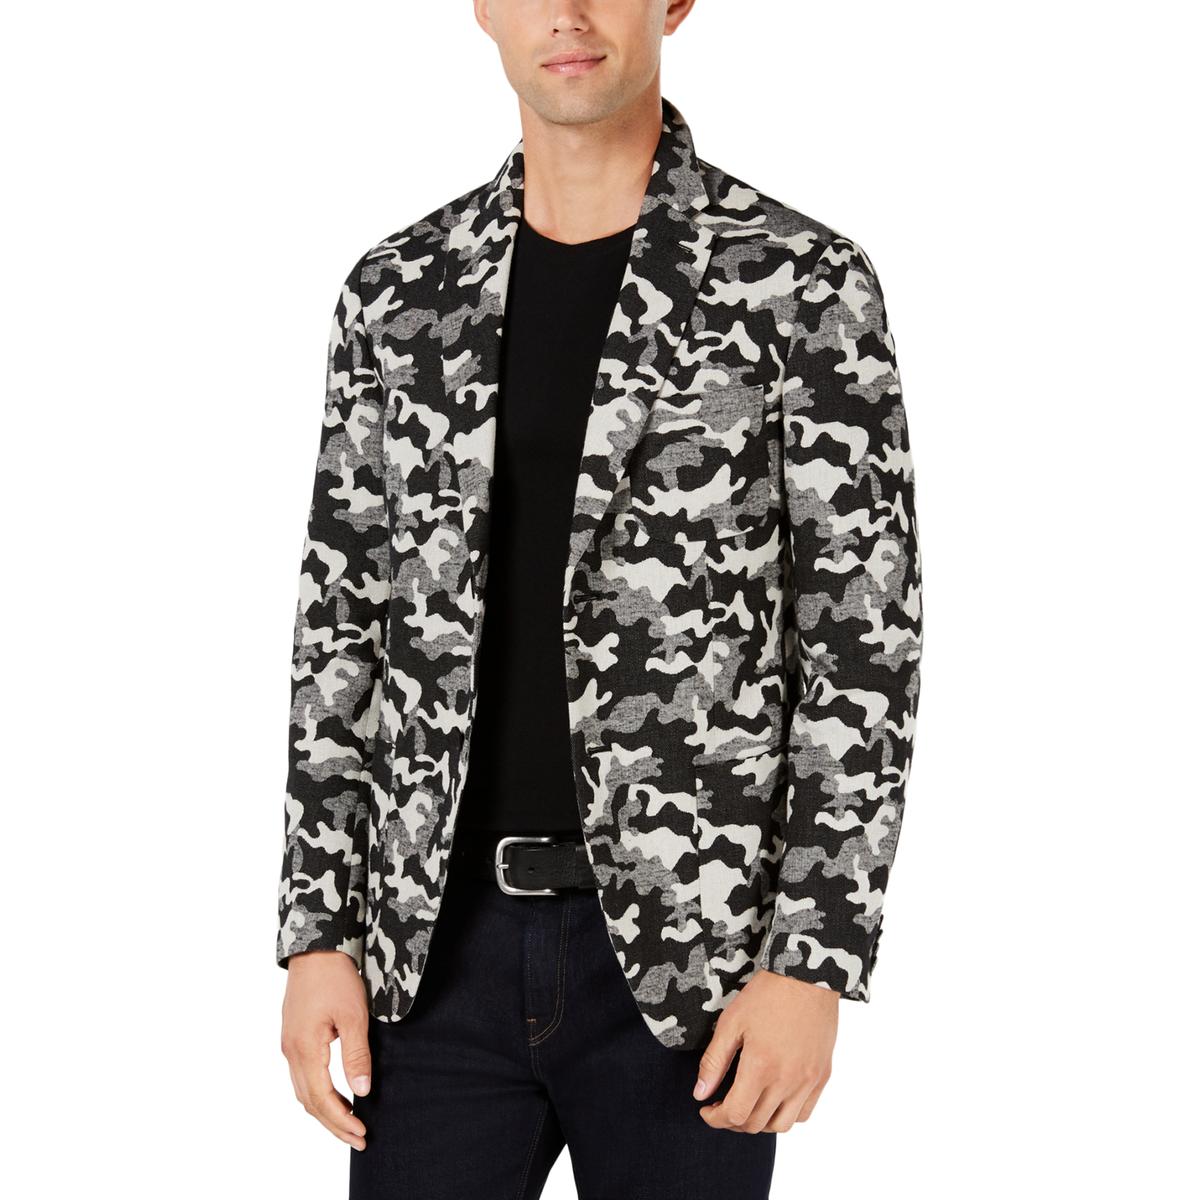 Michael Kors Mens Black Camo Two-Button Sportcoat Blazer Jacket 42R